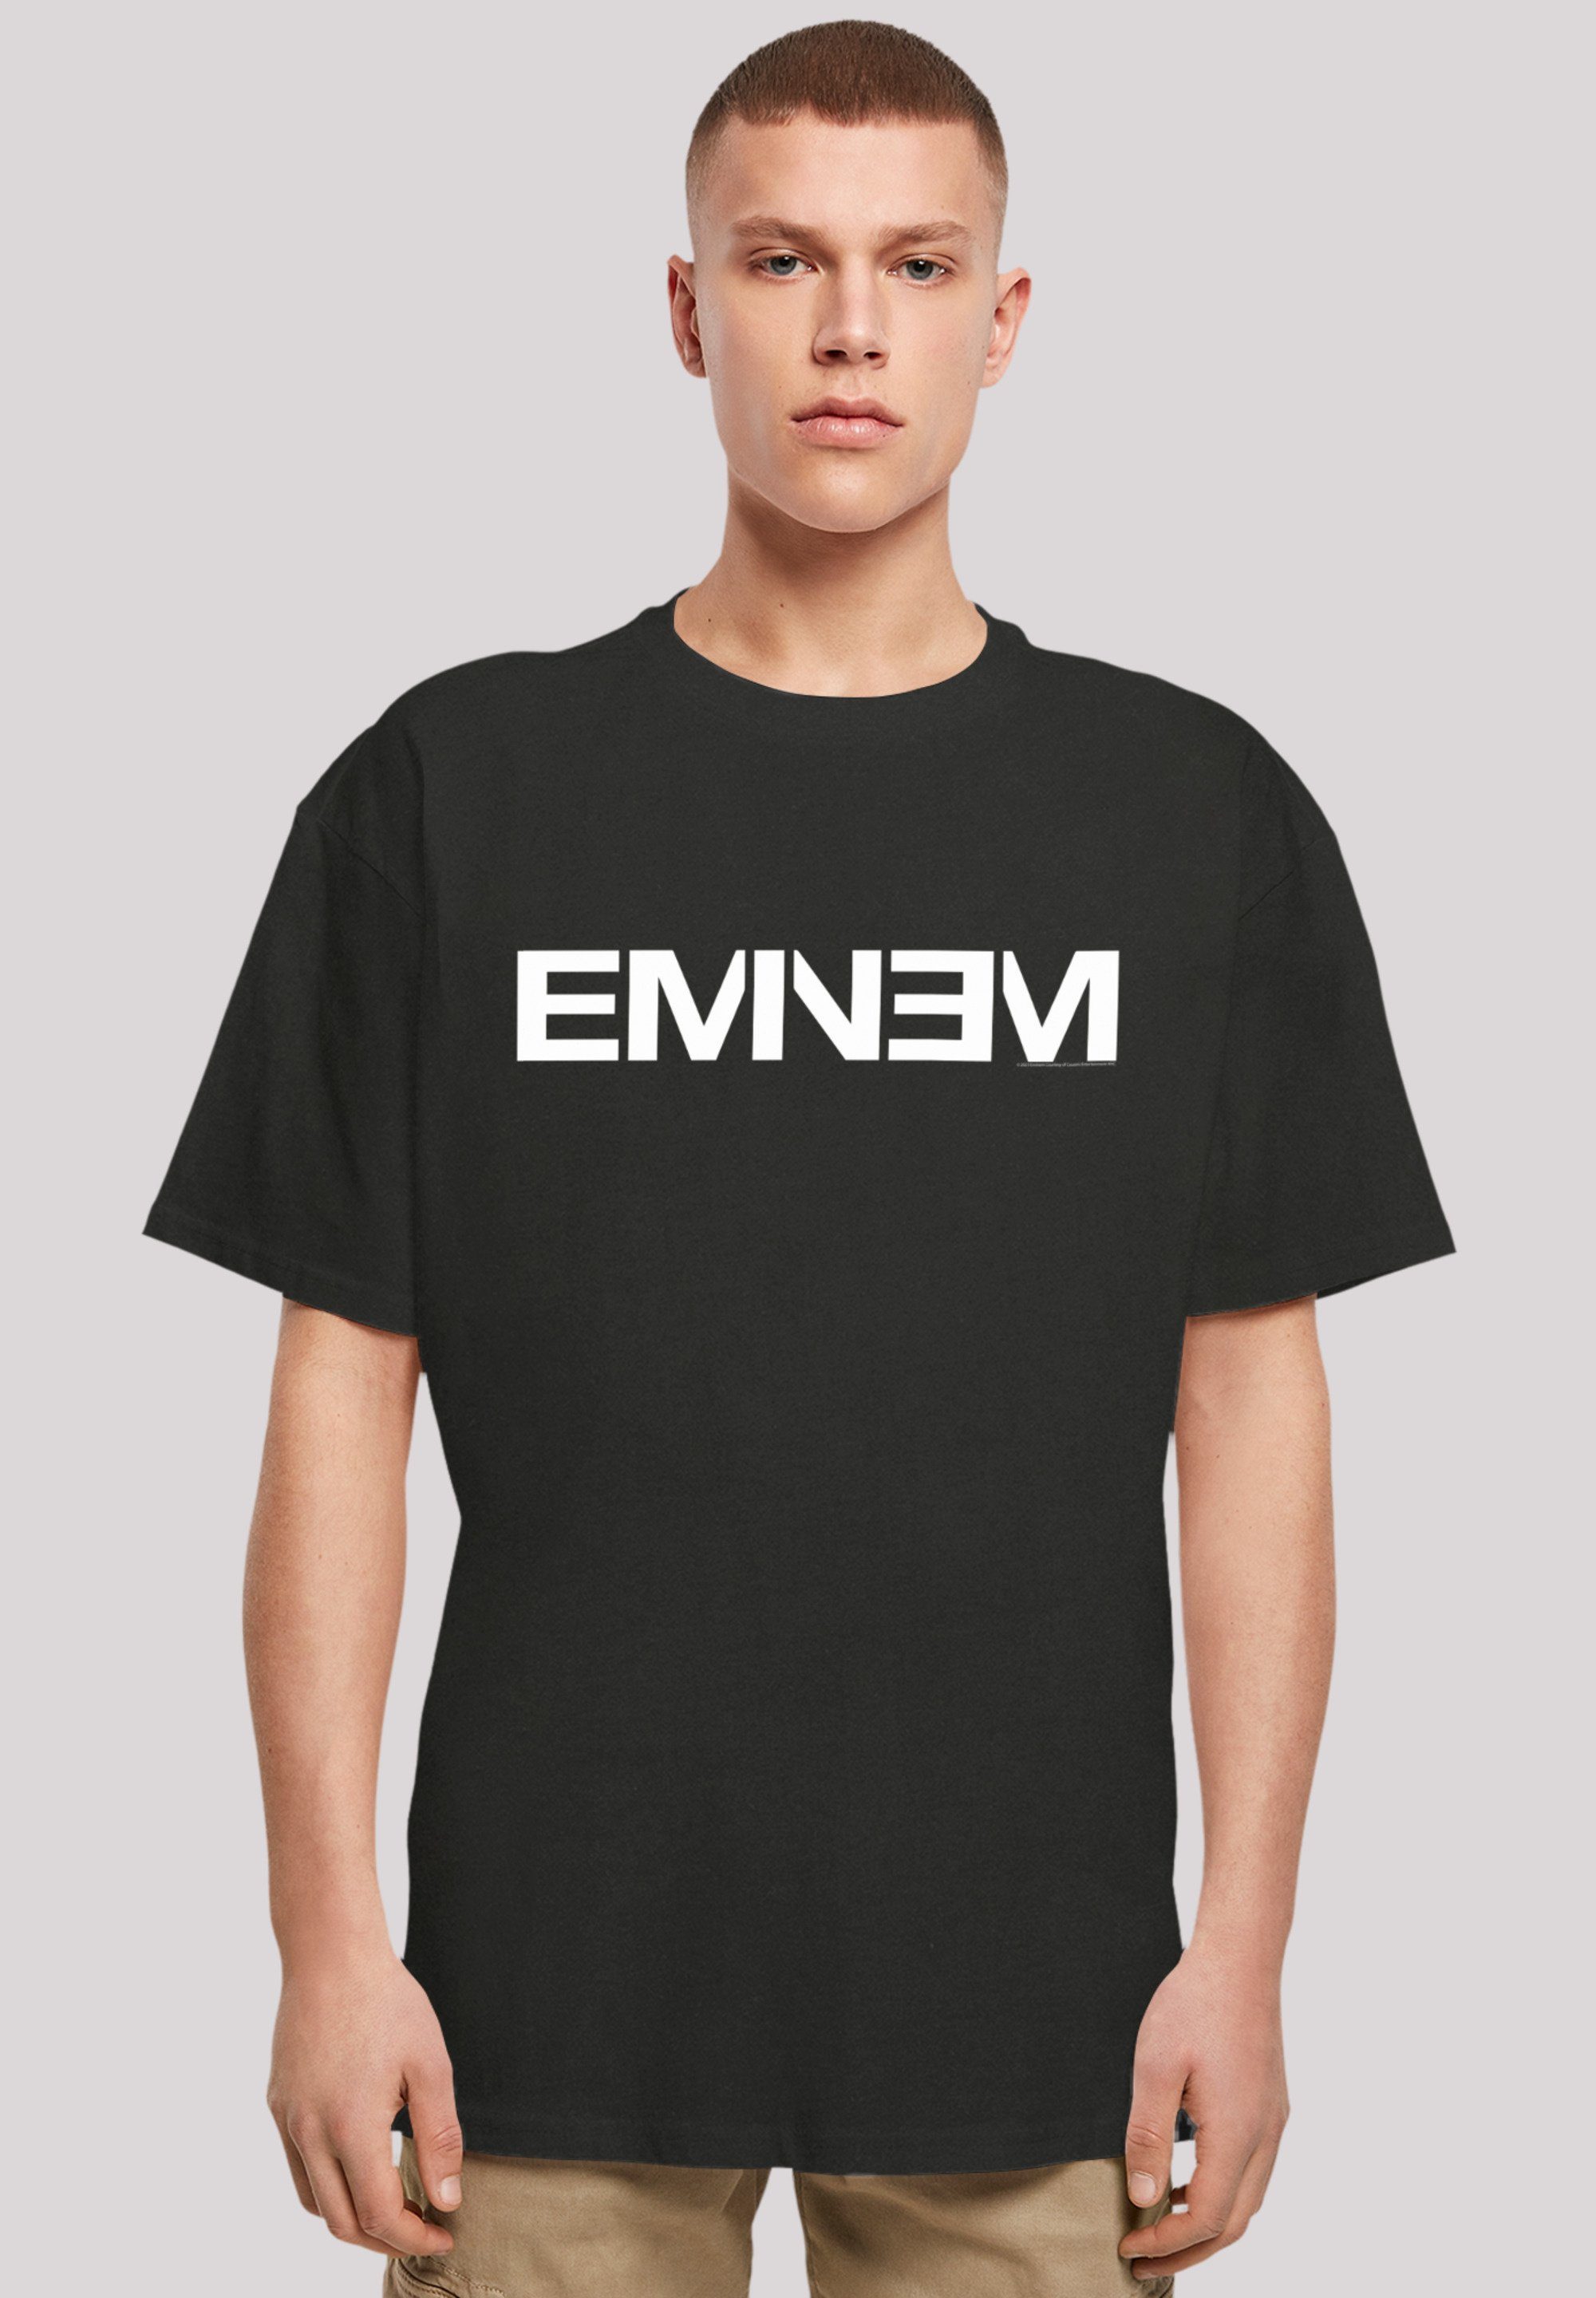 F4NT4STIC T-Shirt Eminem Hip Hop Rap Music Premium Qualität, Musik schwarz